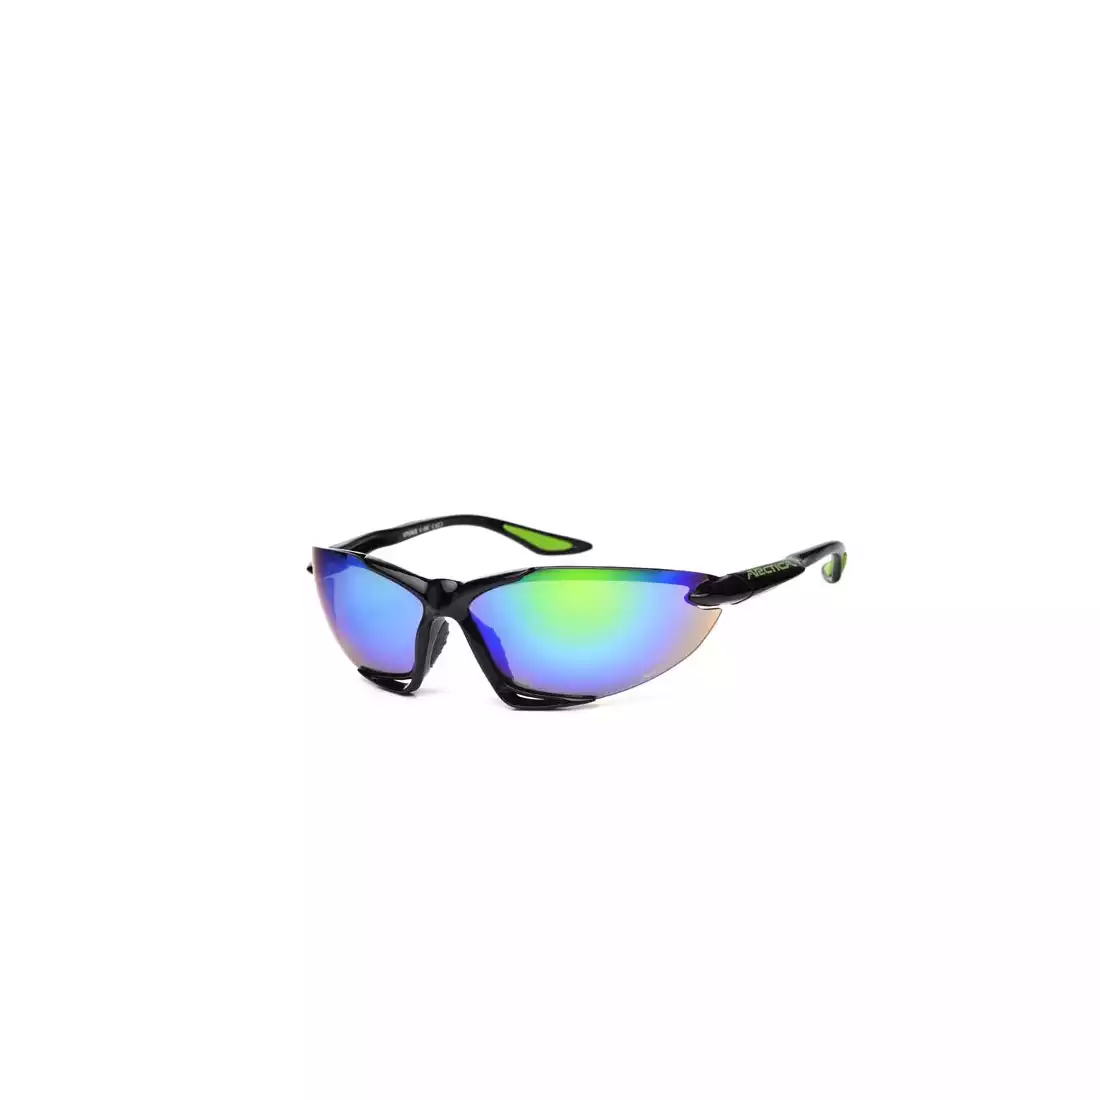 ARCTICA okulary rowerowe / sportowe, S 50 C